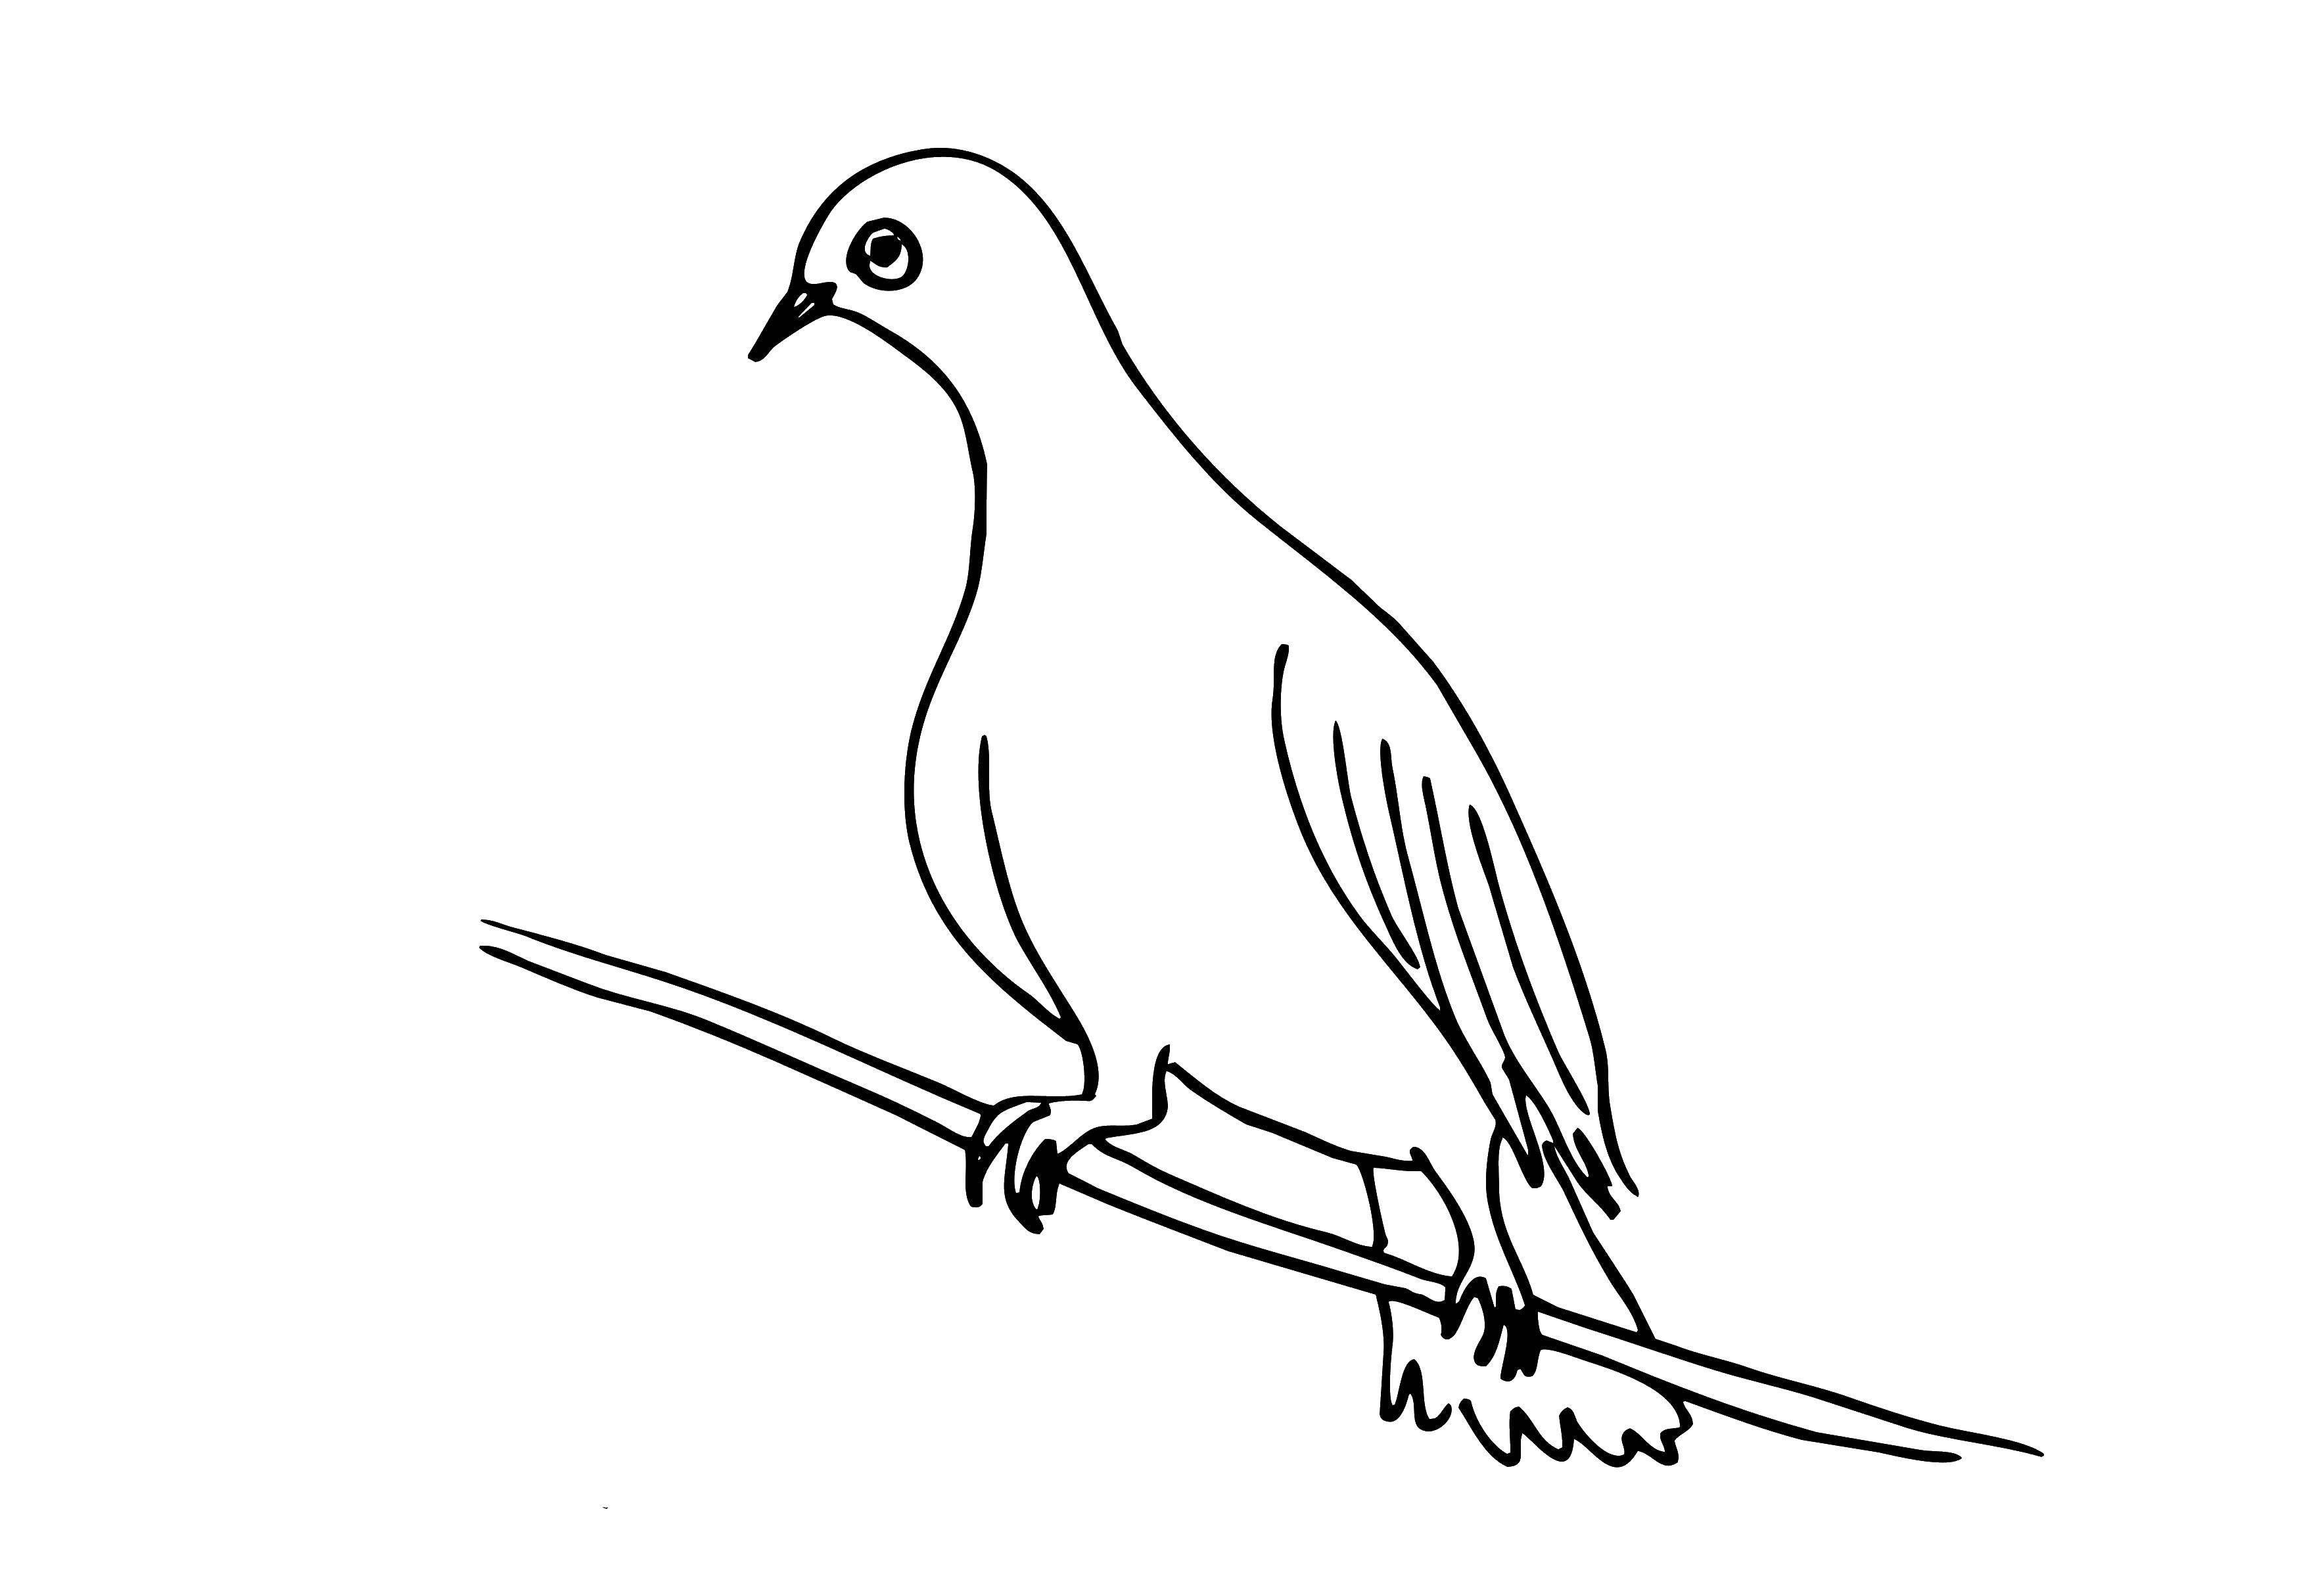 Coloring Lovebirds on a perch. Category birds. Tags:  bird, dove, branch.